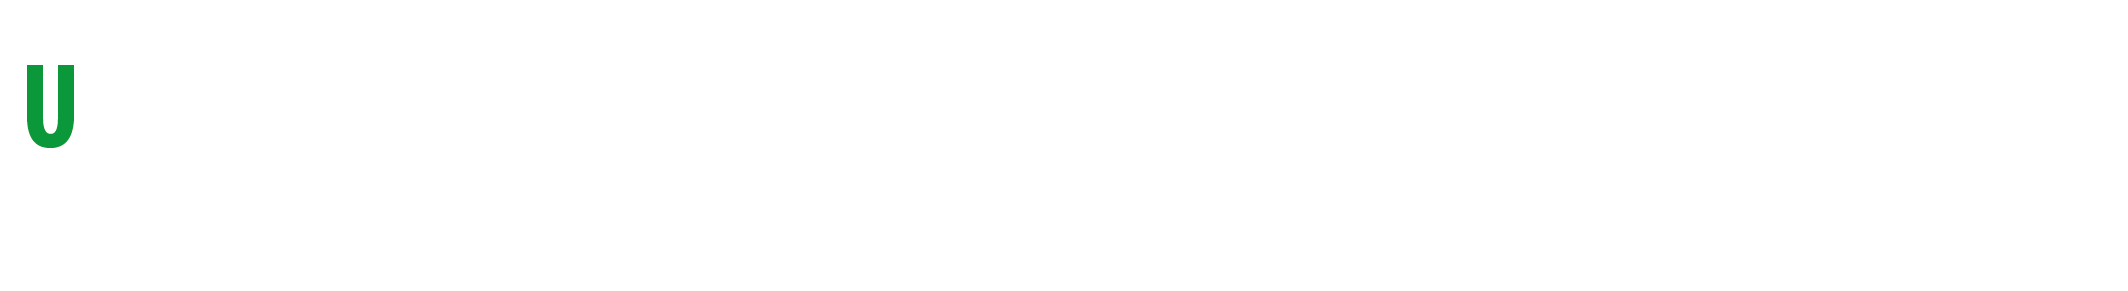 Ullersdorfer Golfnachrichten